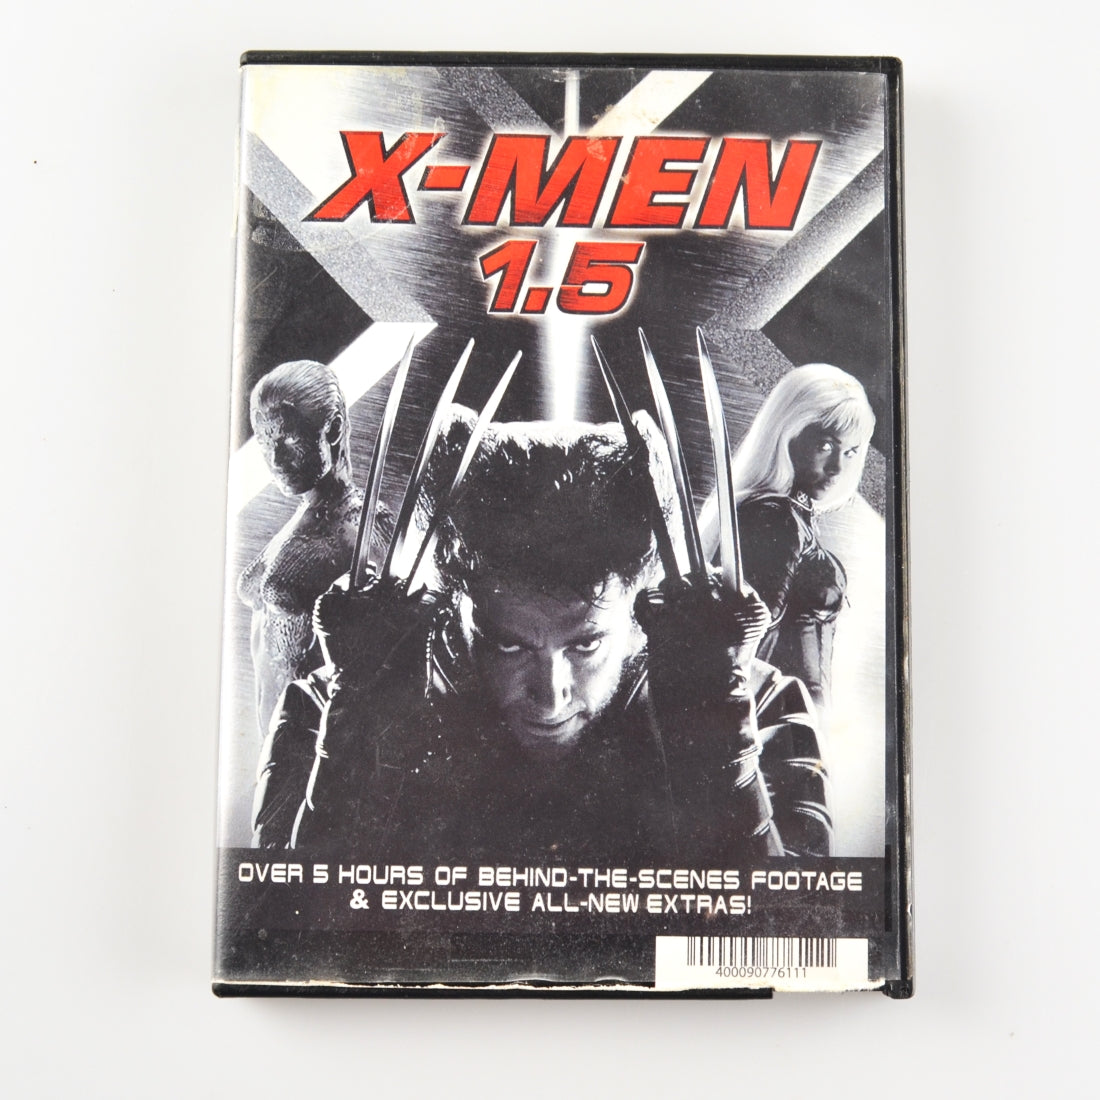 X-Men 1.5 (DVD, 2003, 2-Disc Set) Patrick Stewart, Ian Mckellen, Hugh Jackman